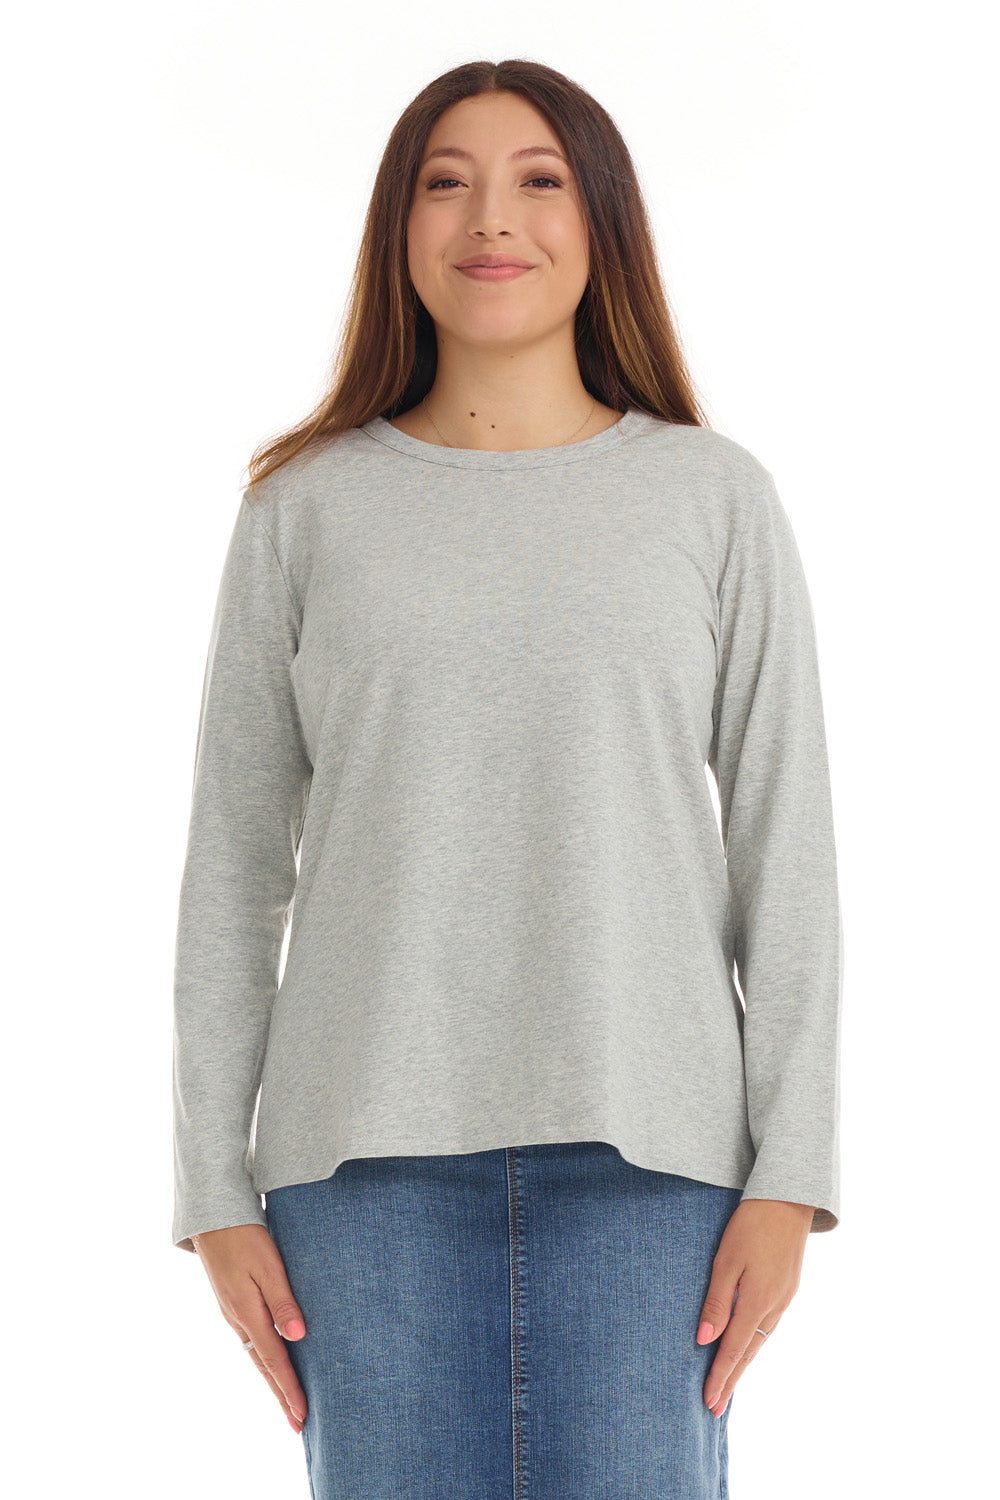 light gray basic loose cotton shirt for women 